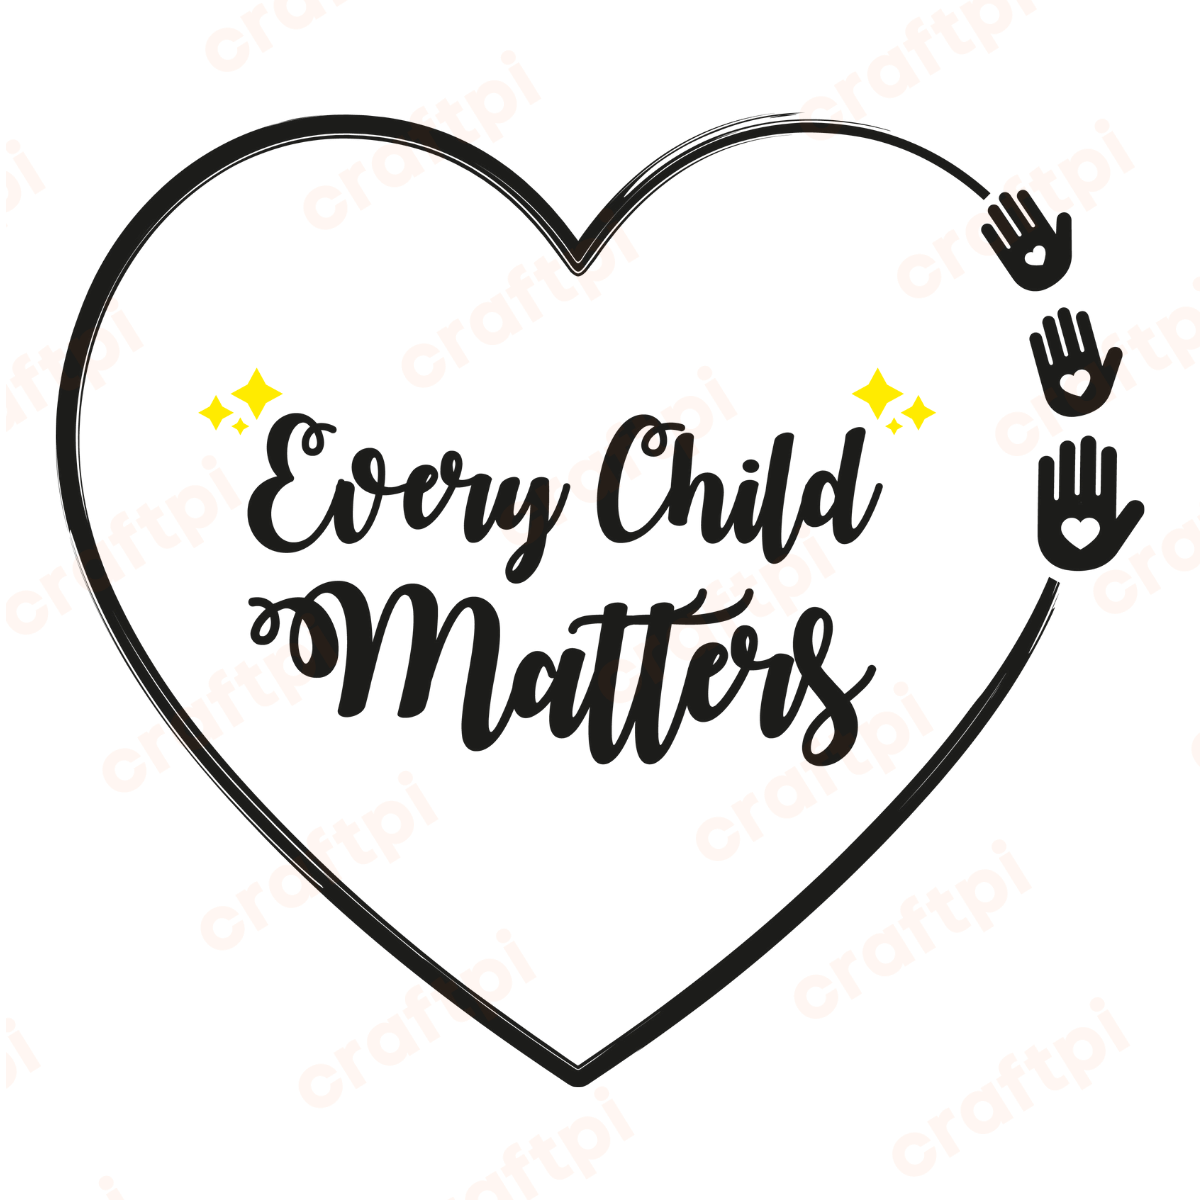 every child matters heart